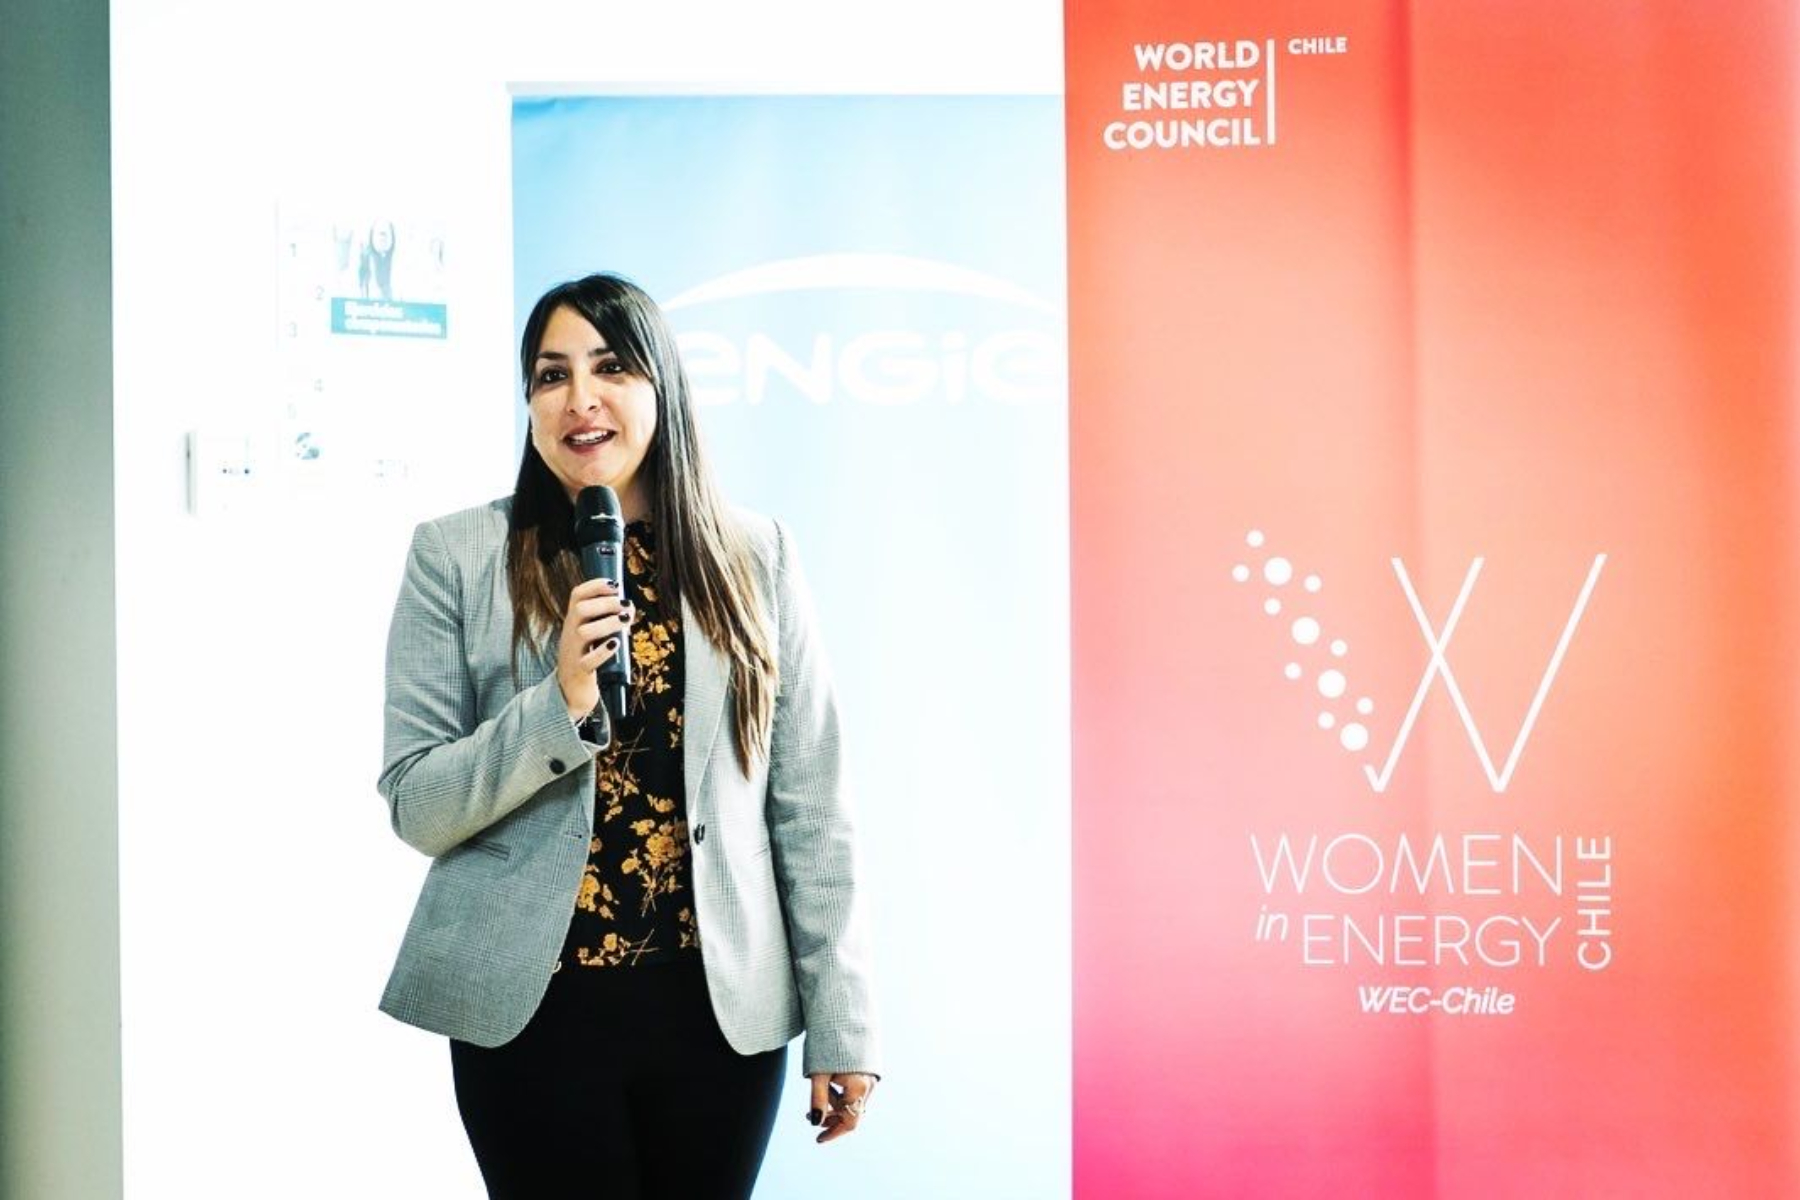 Nasrim Butler, de Women in Energy: “Pese a los avances aún veo brechas de género importantes”